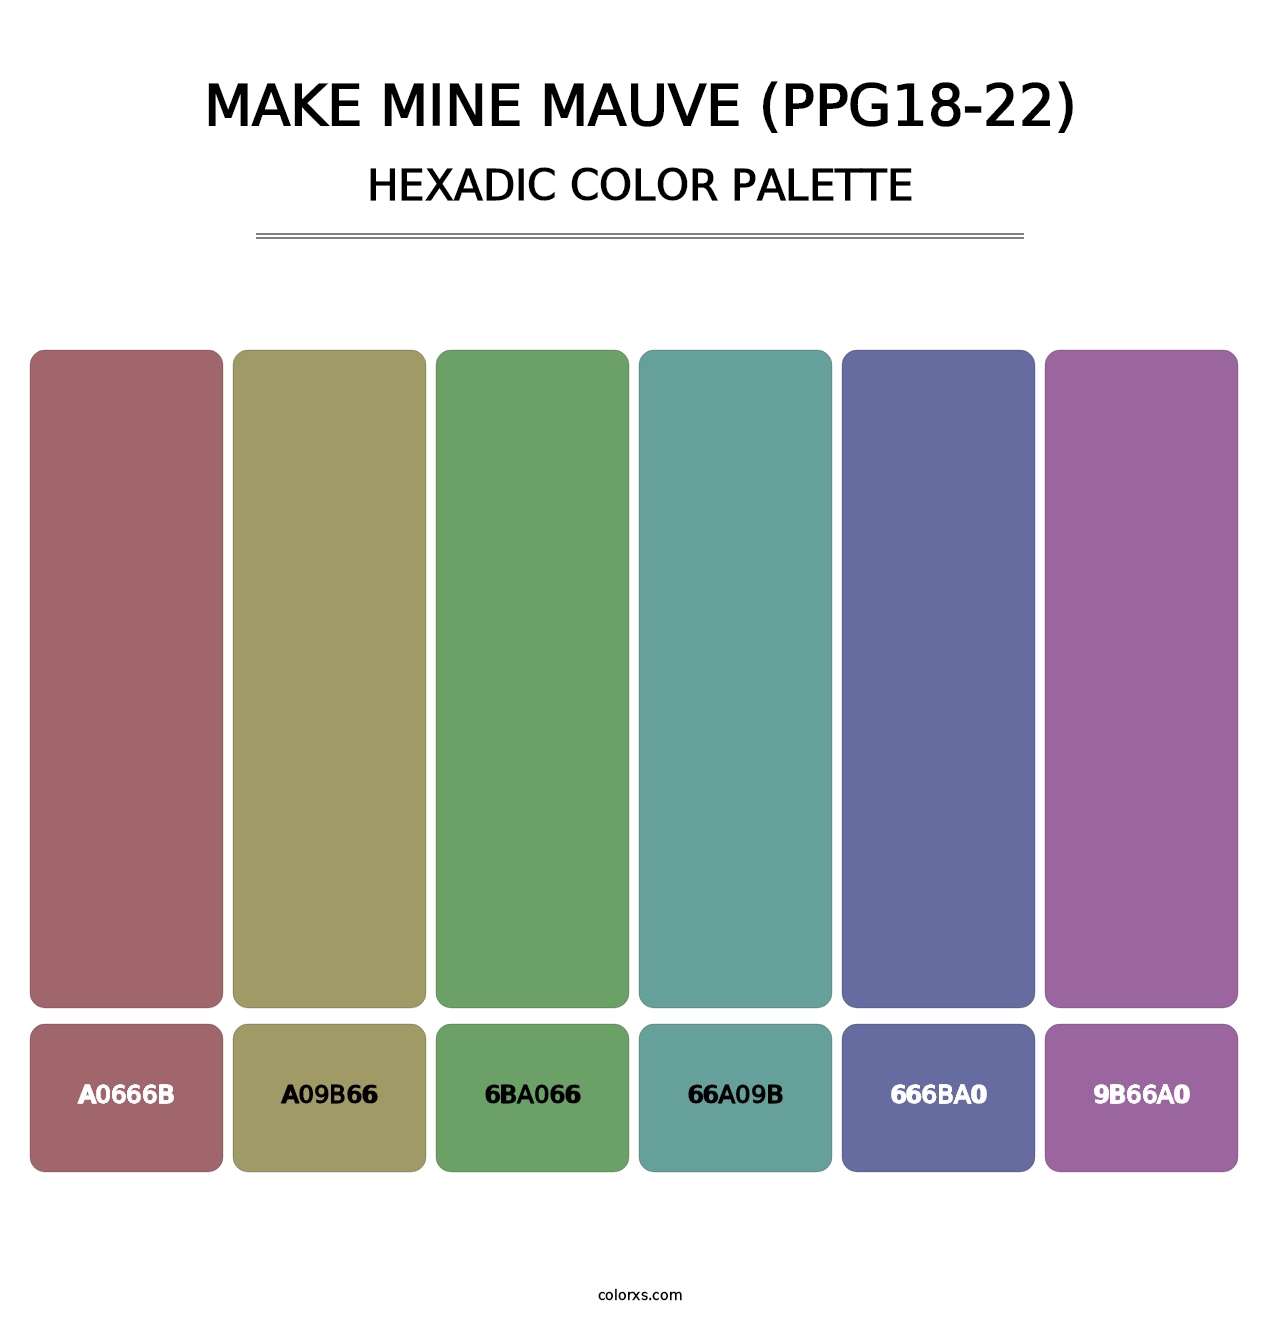 Make Mine Mauve (PPG18-22) - Hexadic Color Palette